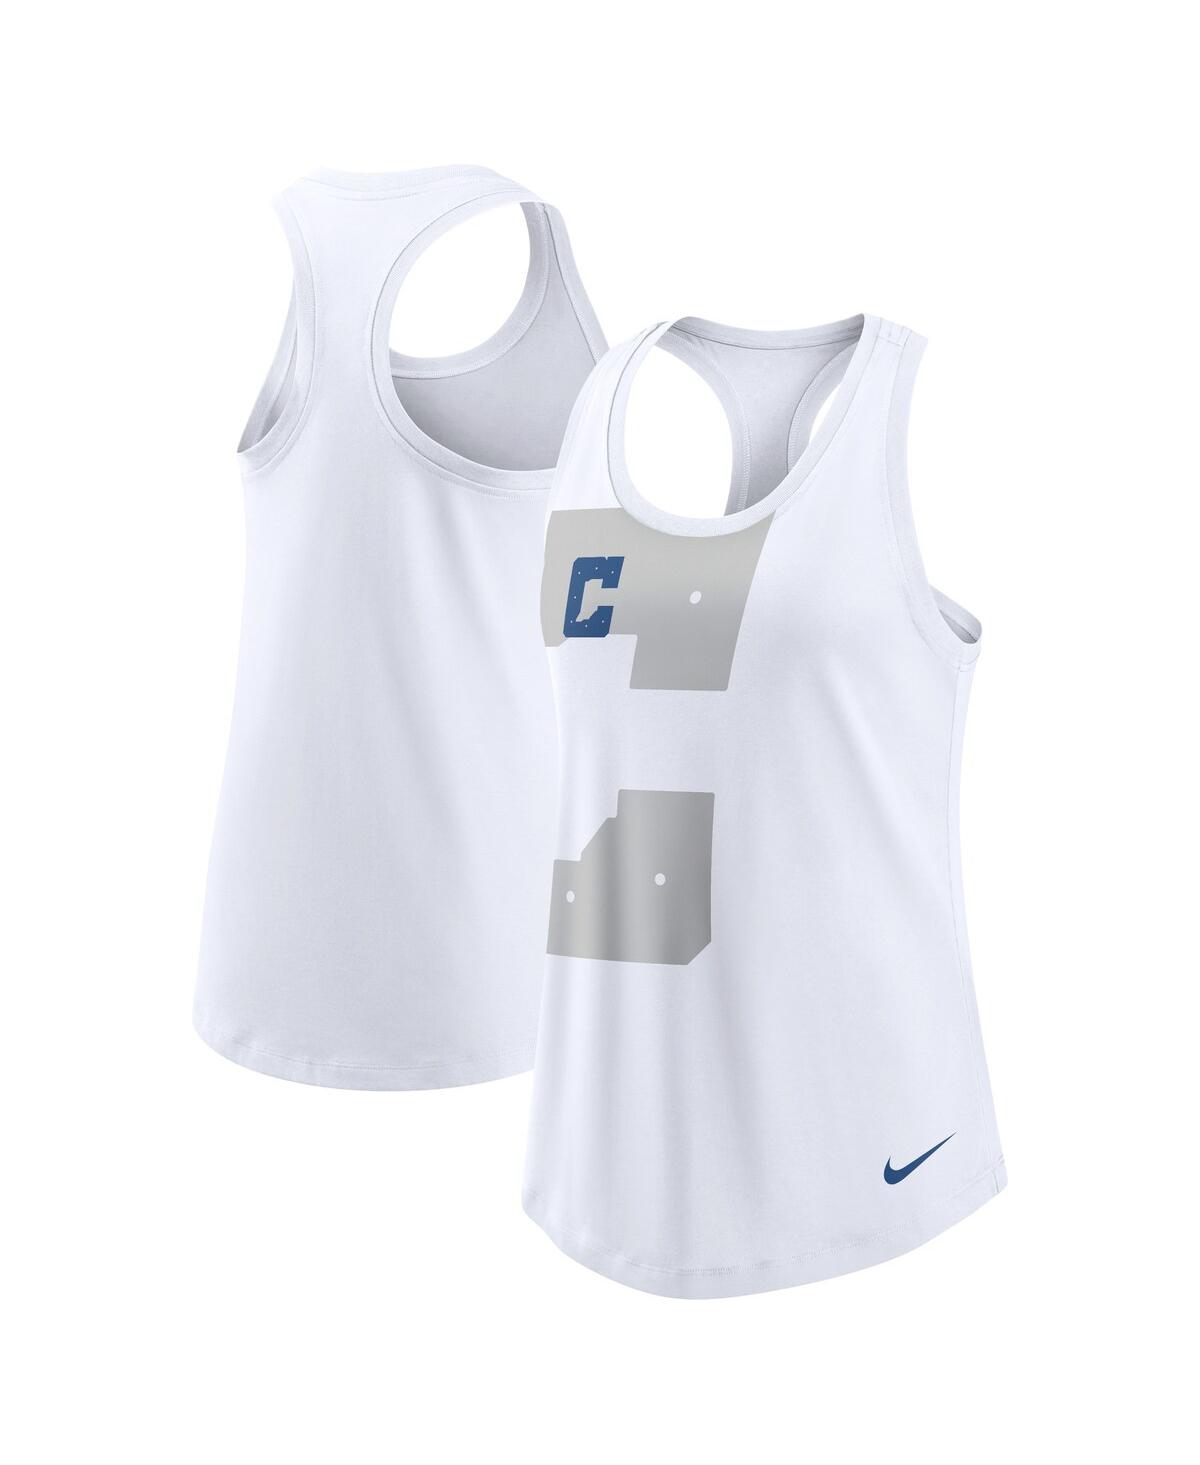 Women's Nike White Indianapolis Colts Tri-Blend Scoop Neck Racerback Tank Top - White